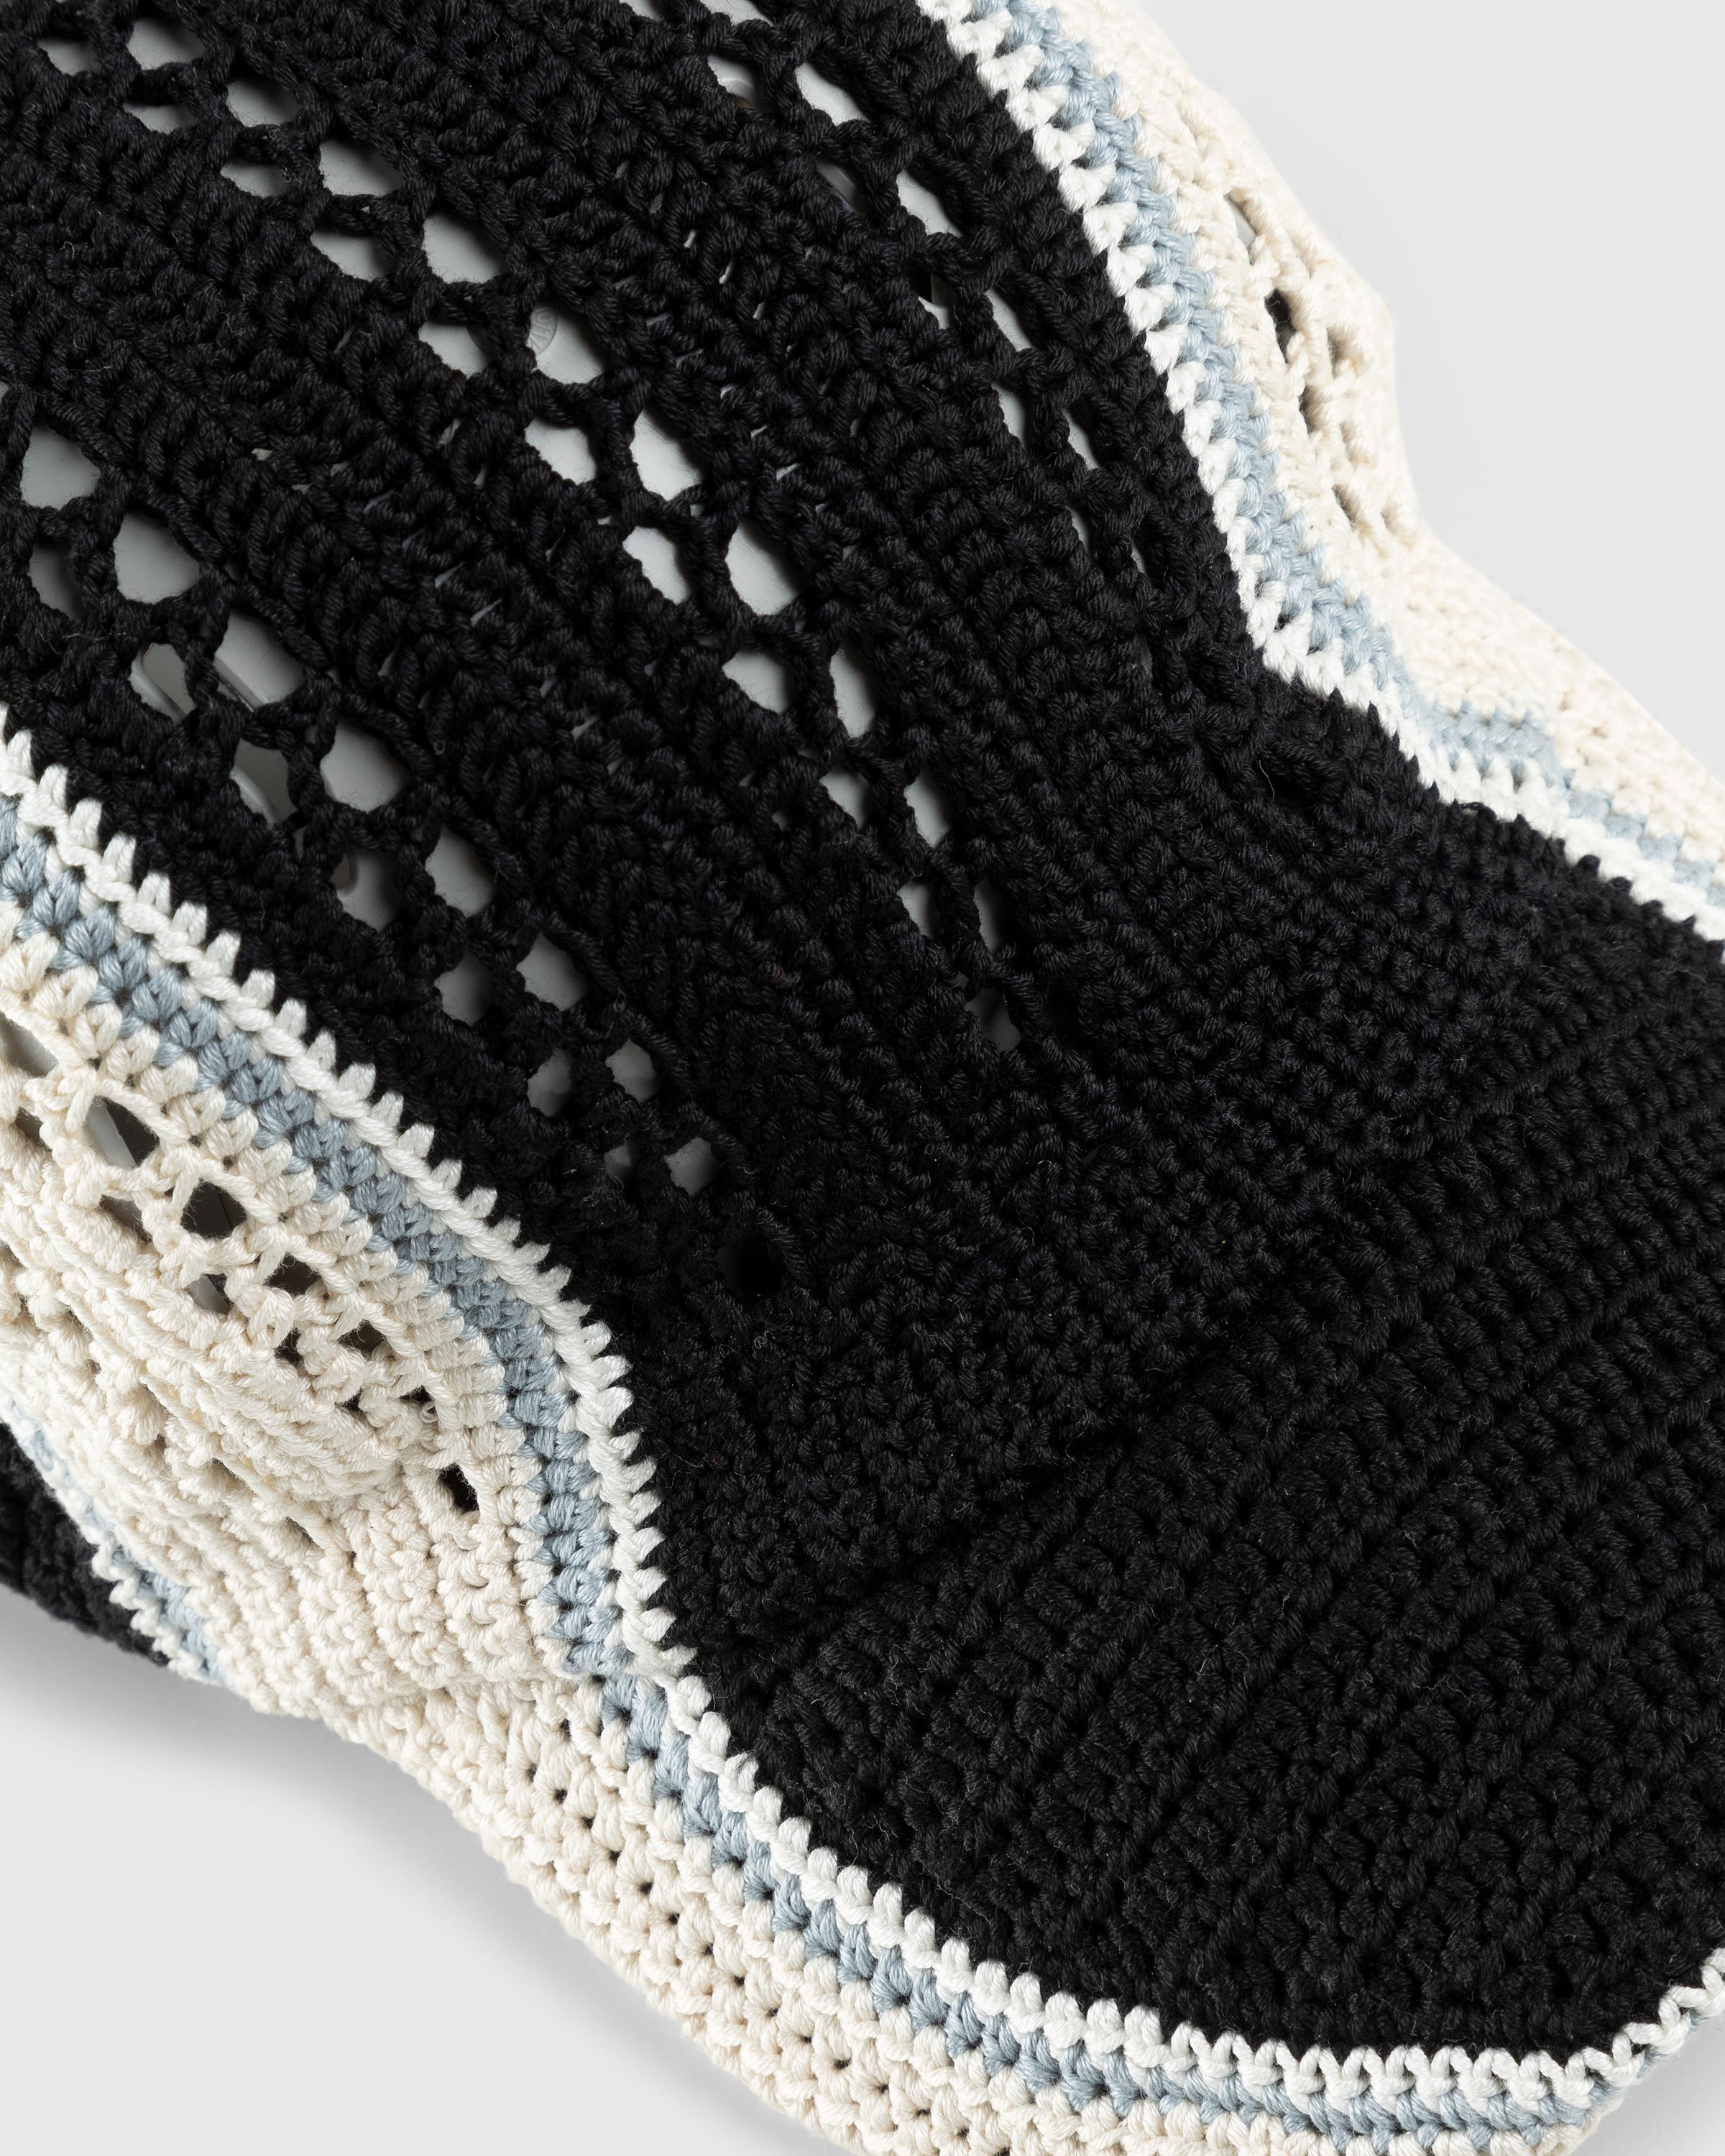 SSU - Crochet Baseball Cap Midnight Drive Black - Accessories - Black - Image 4